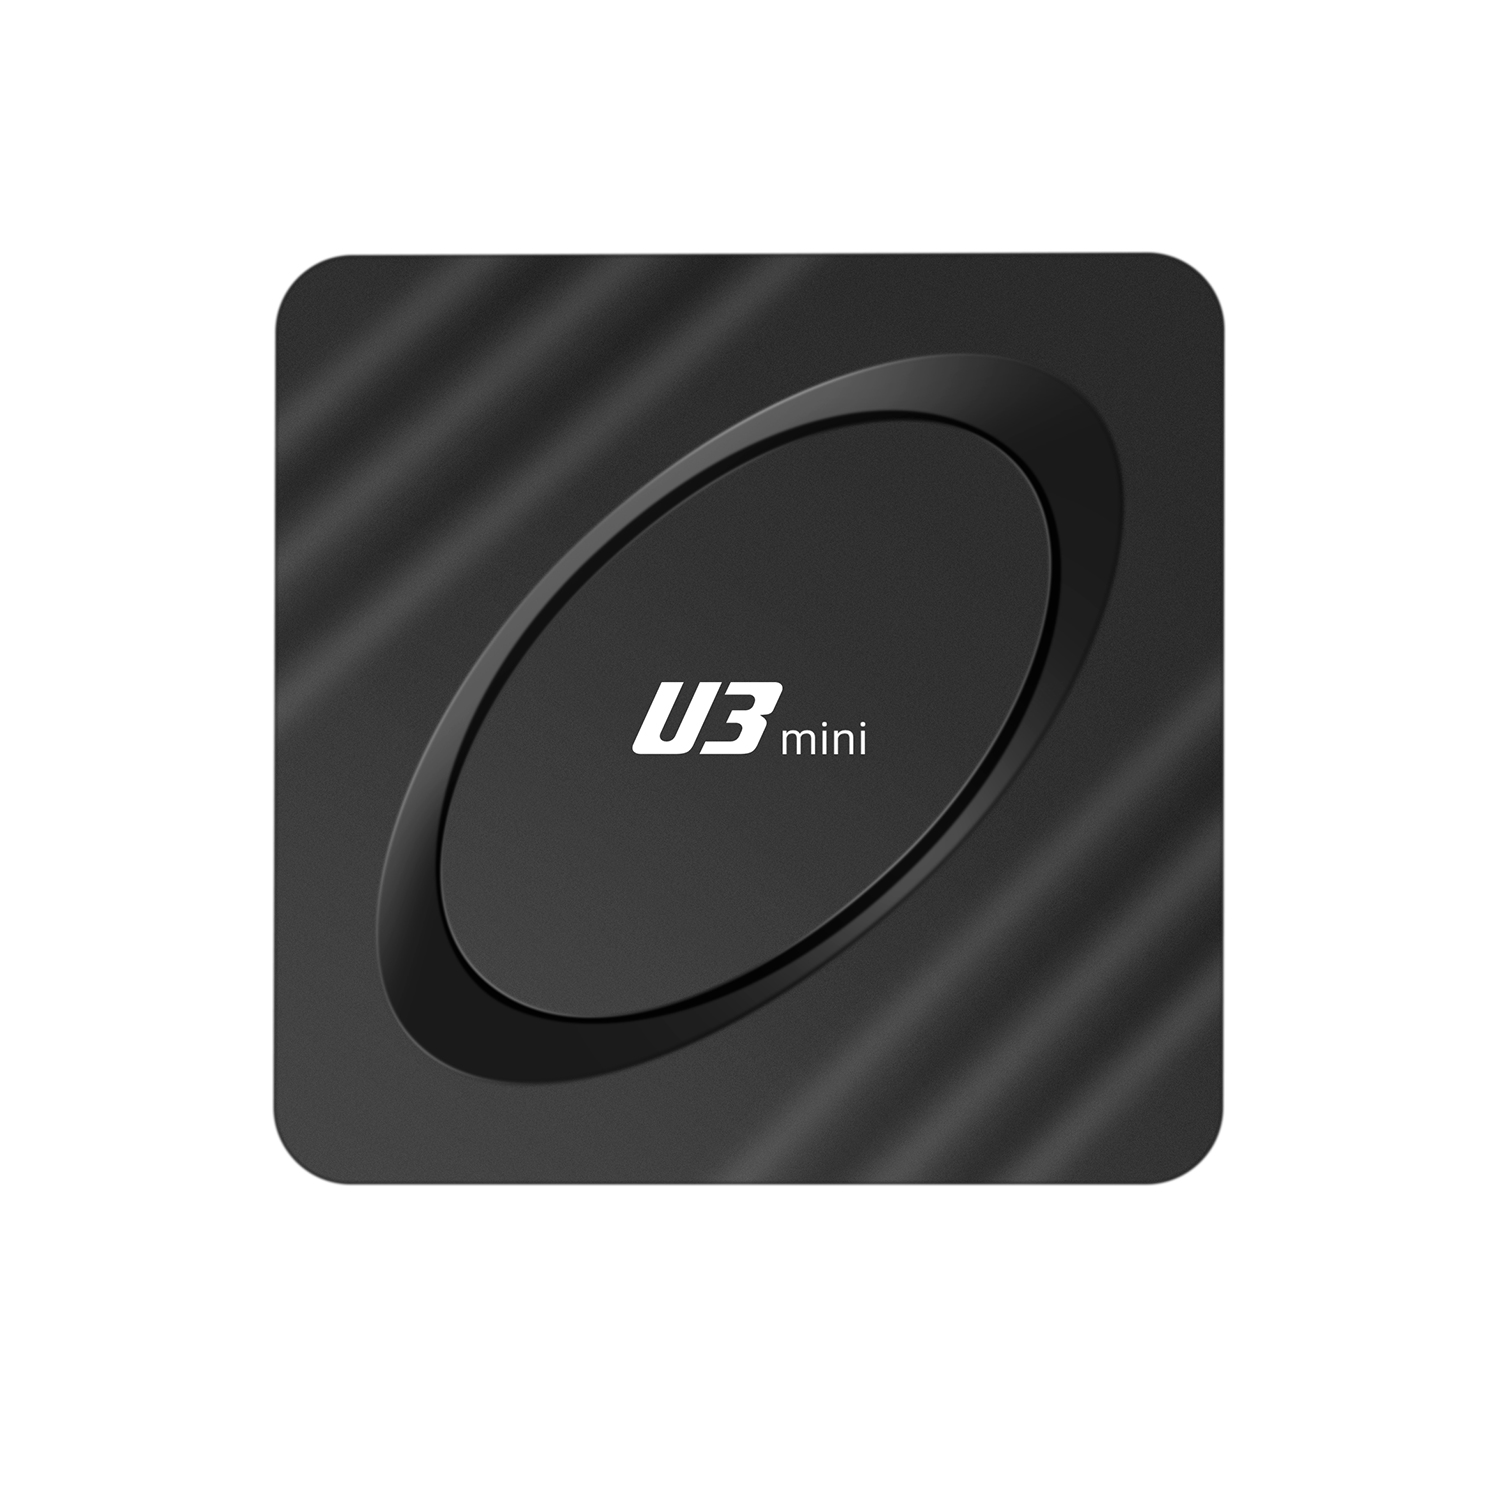 U3 mini Android tv box